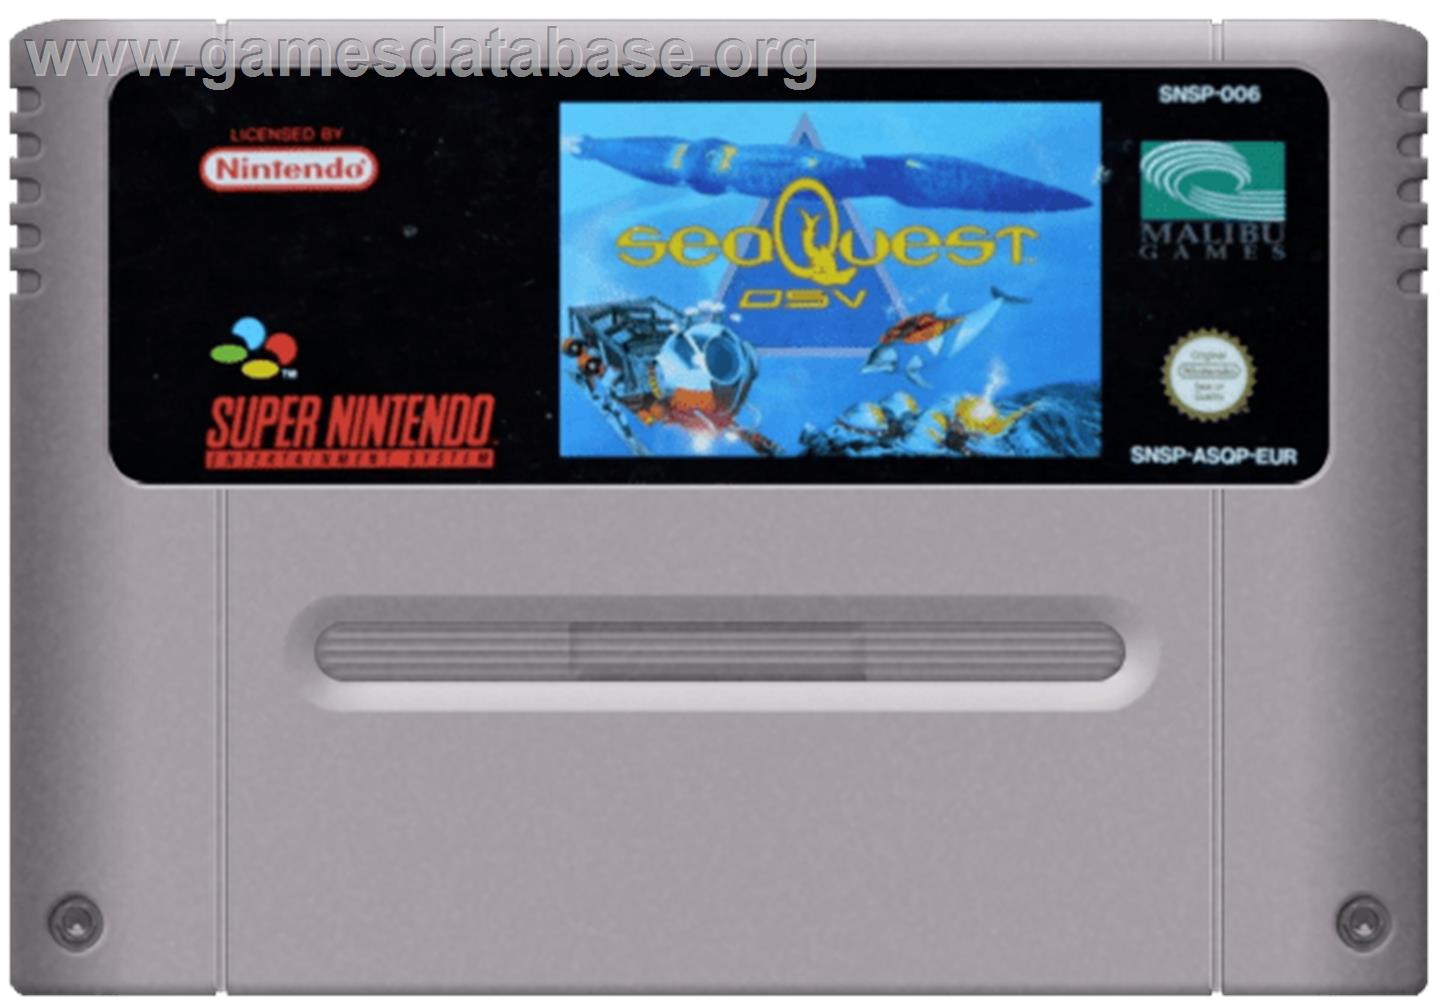 SeaQuest DSV - Nintendo SNES - Artwork - Cartridge